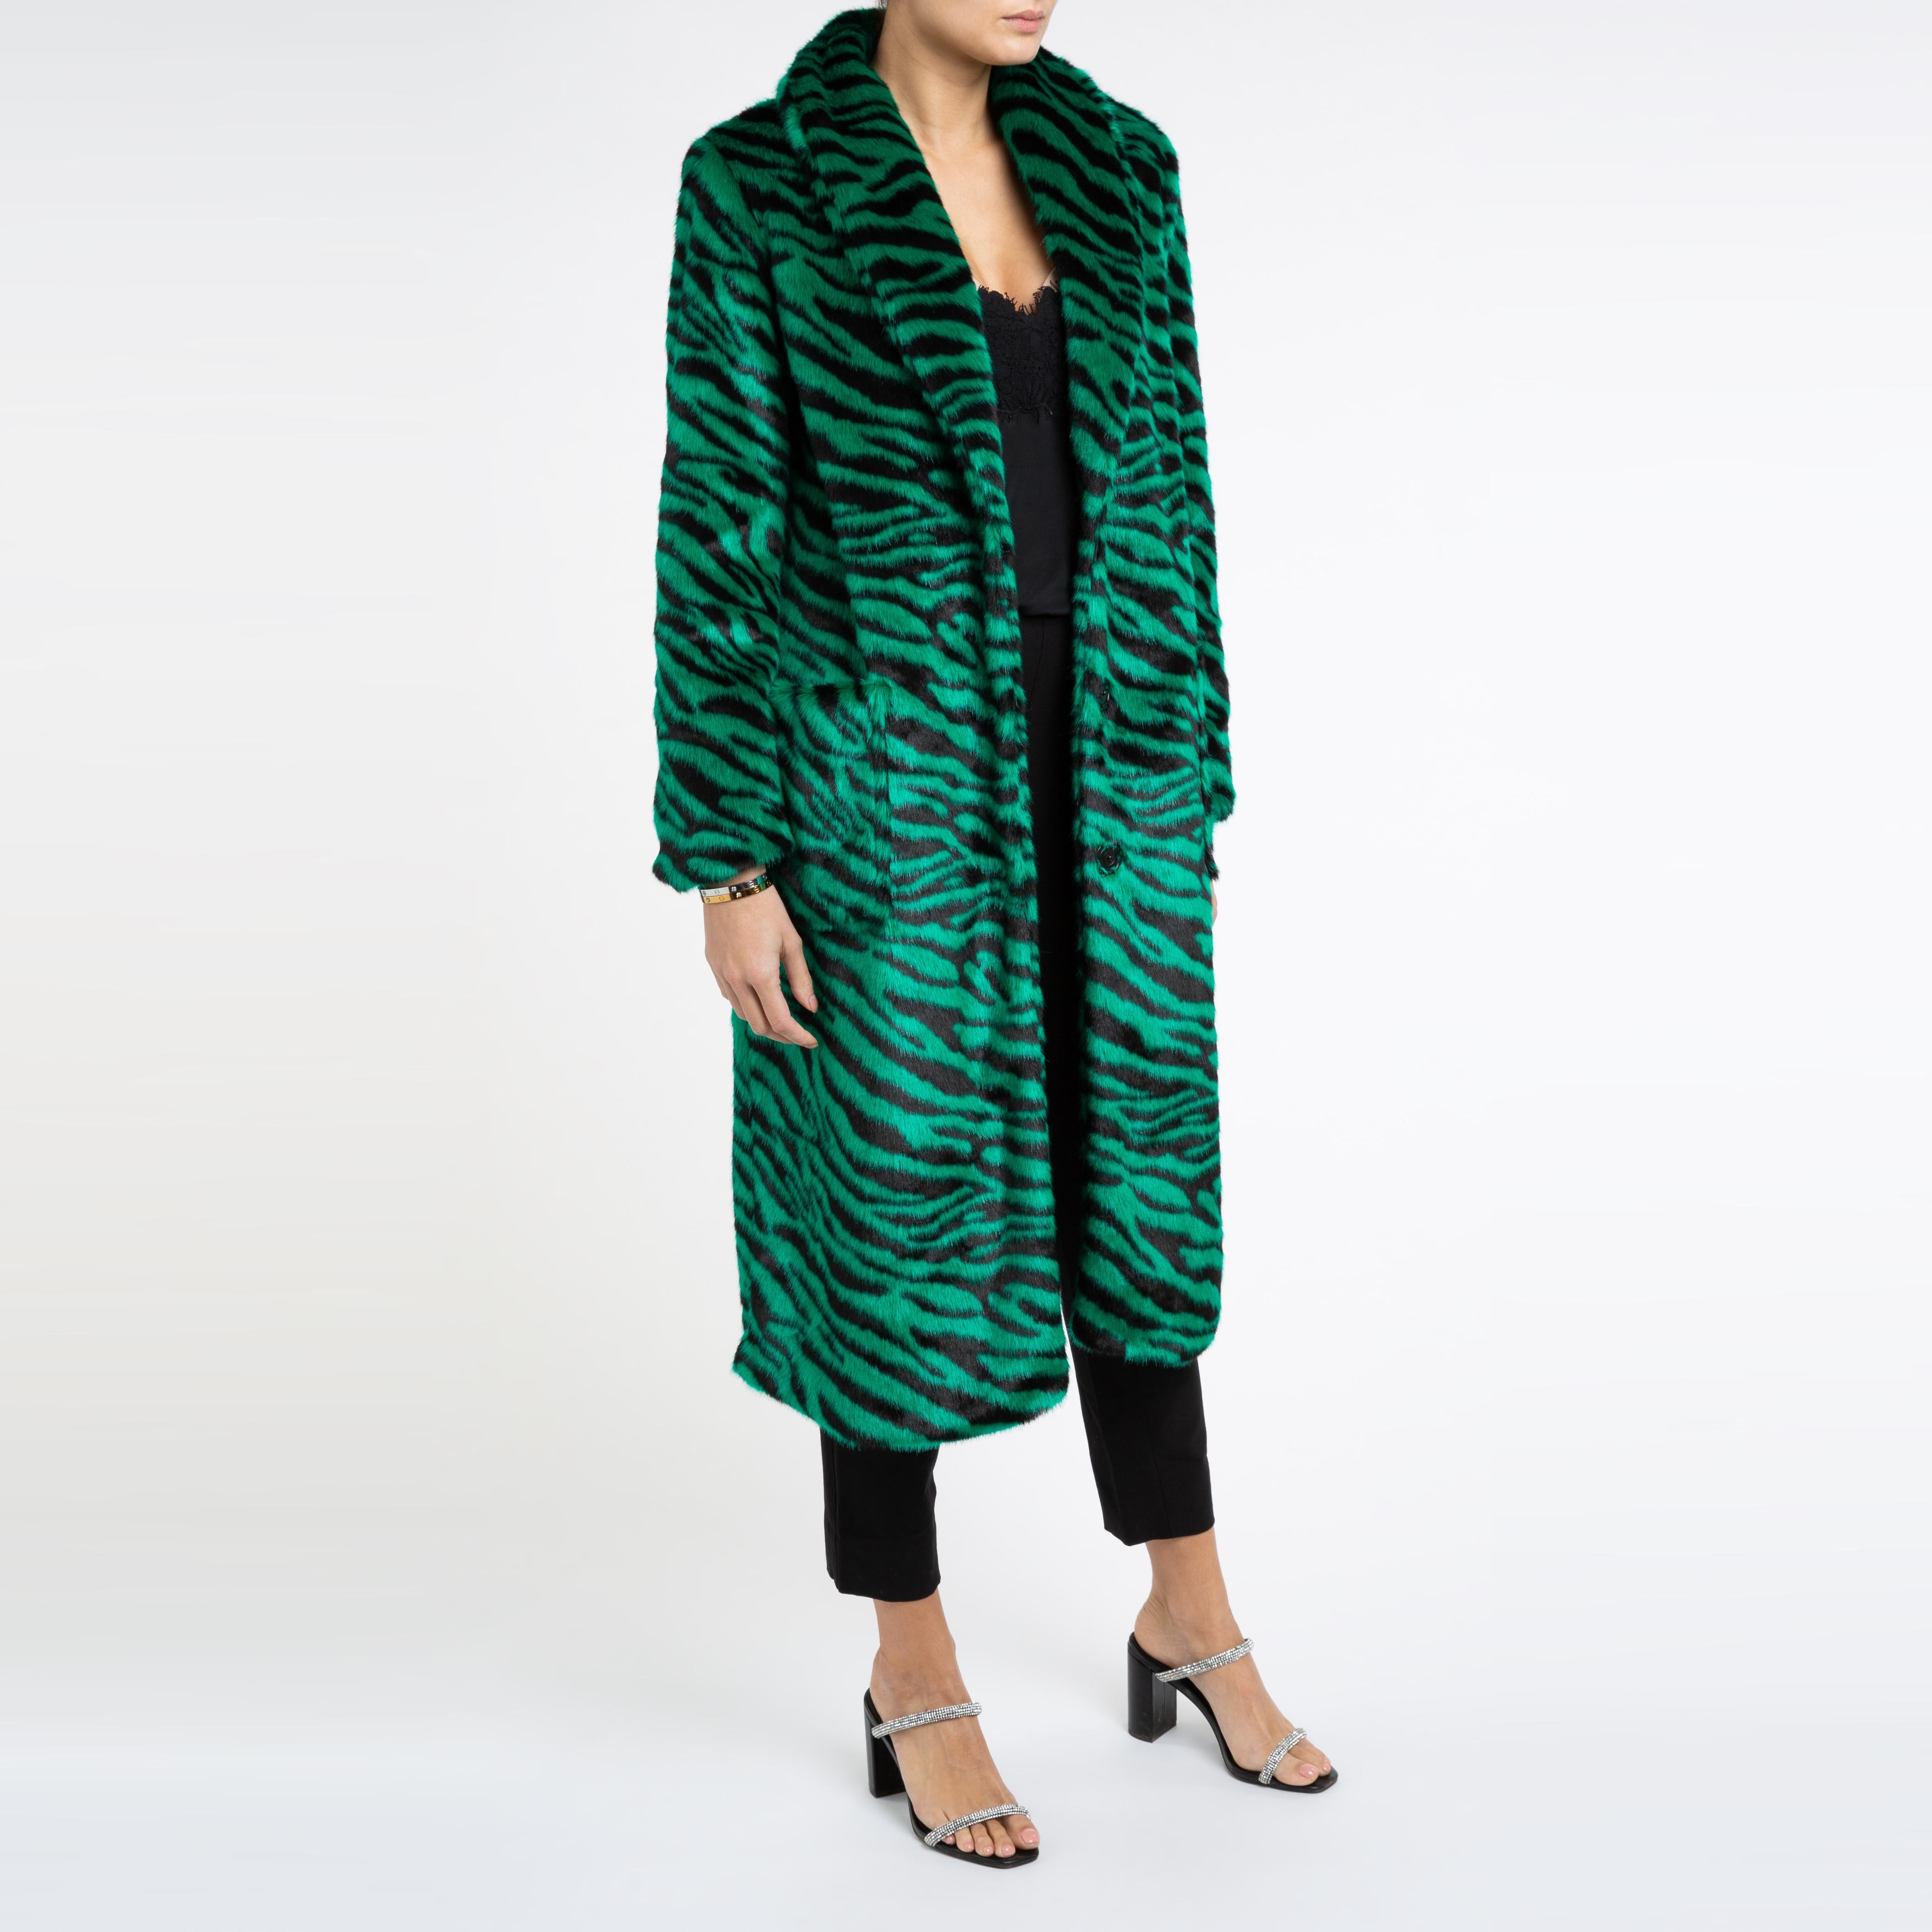 Women's Verheyen London Esmeralda Faux Fur Coat in Emerald Green Zebra Print size uk 14 For Sale